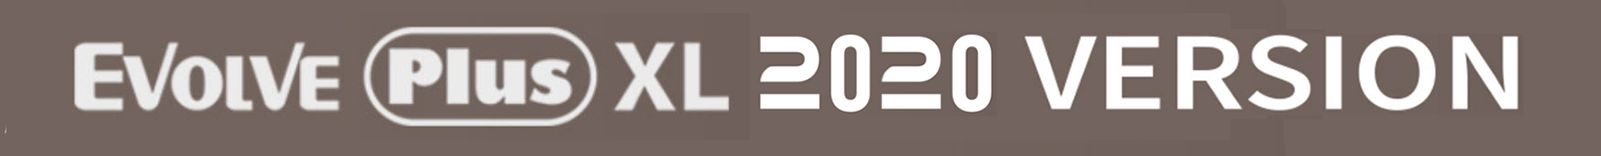 Yocan Evolve Plus XL 2020 Banner